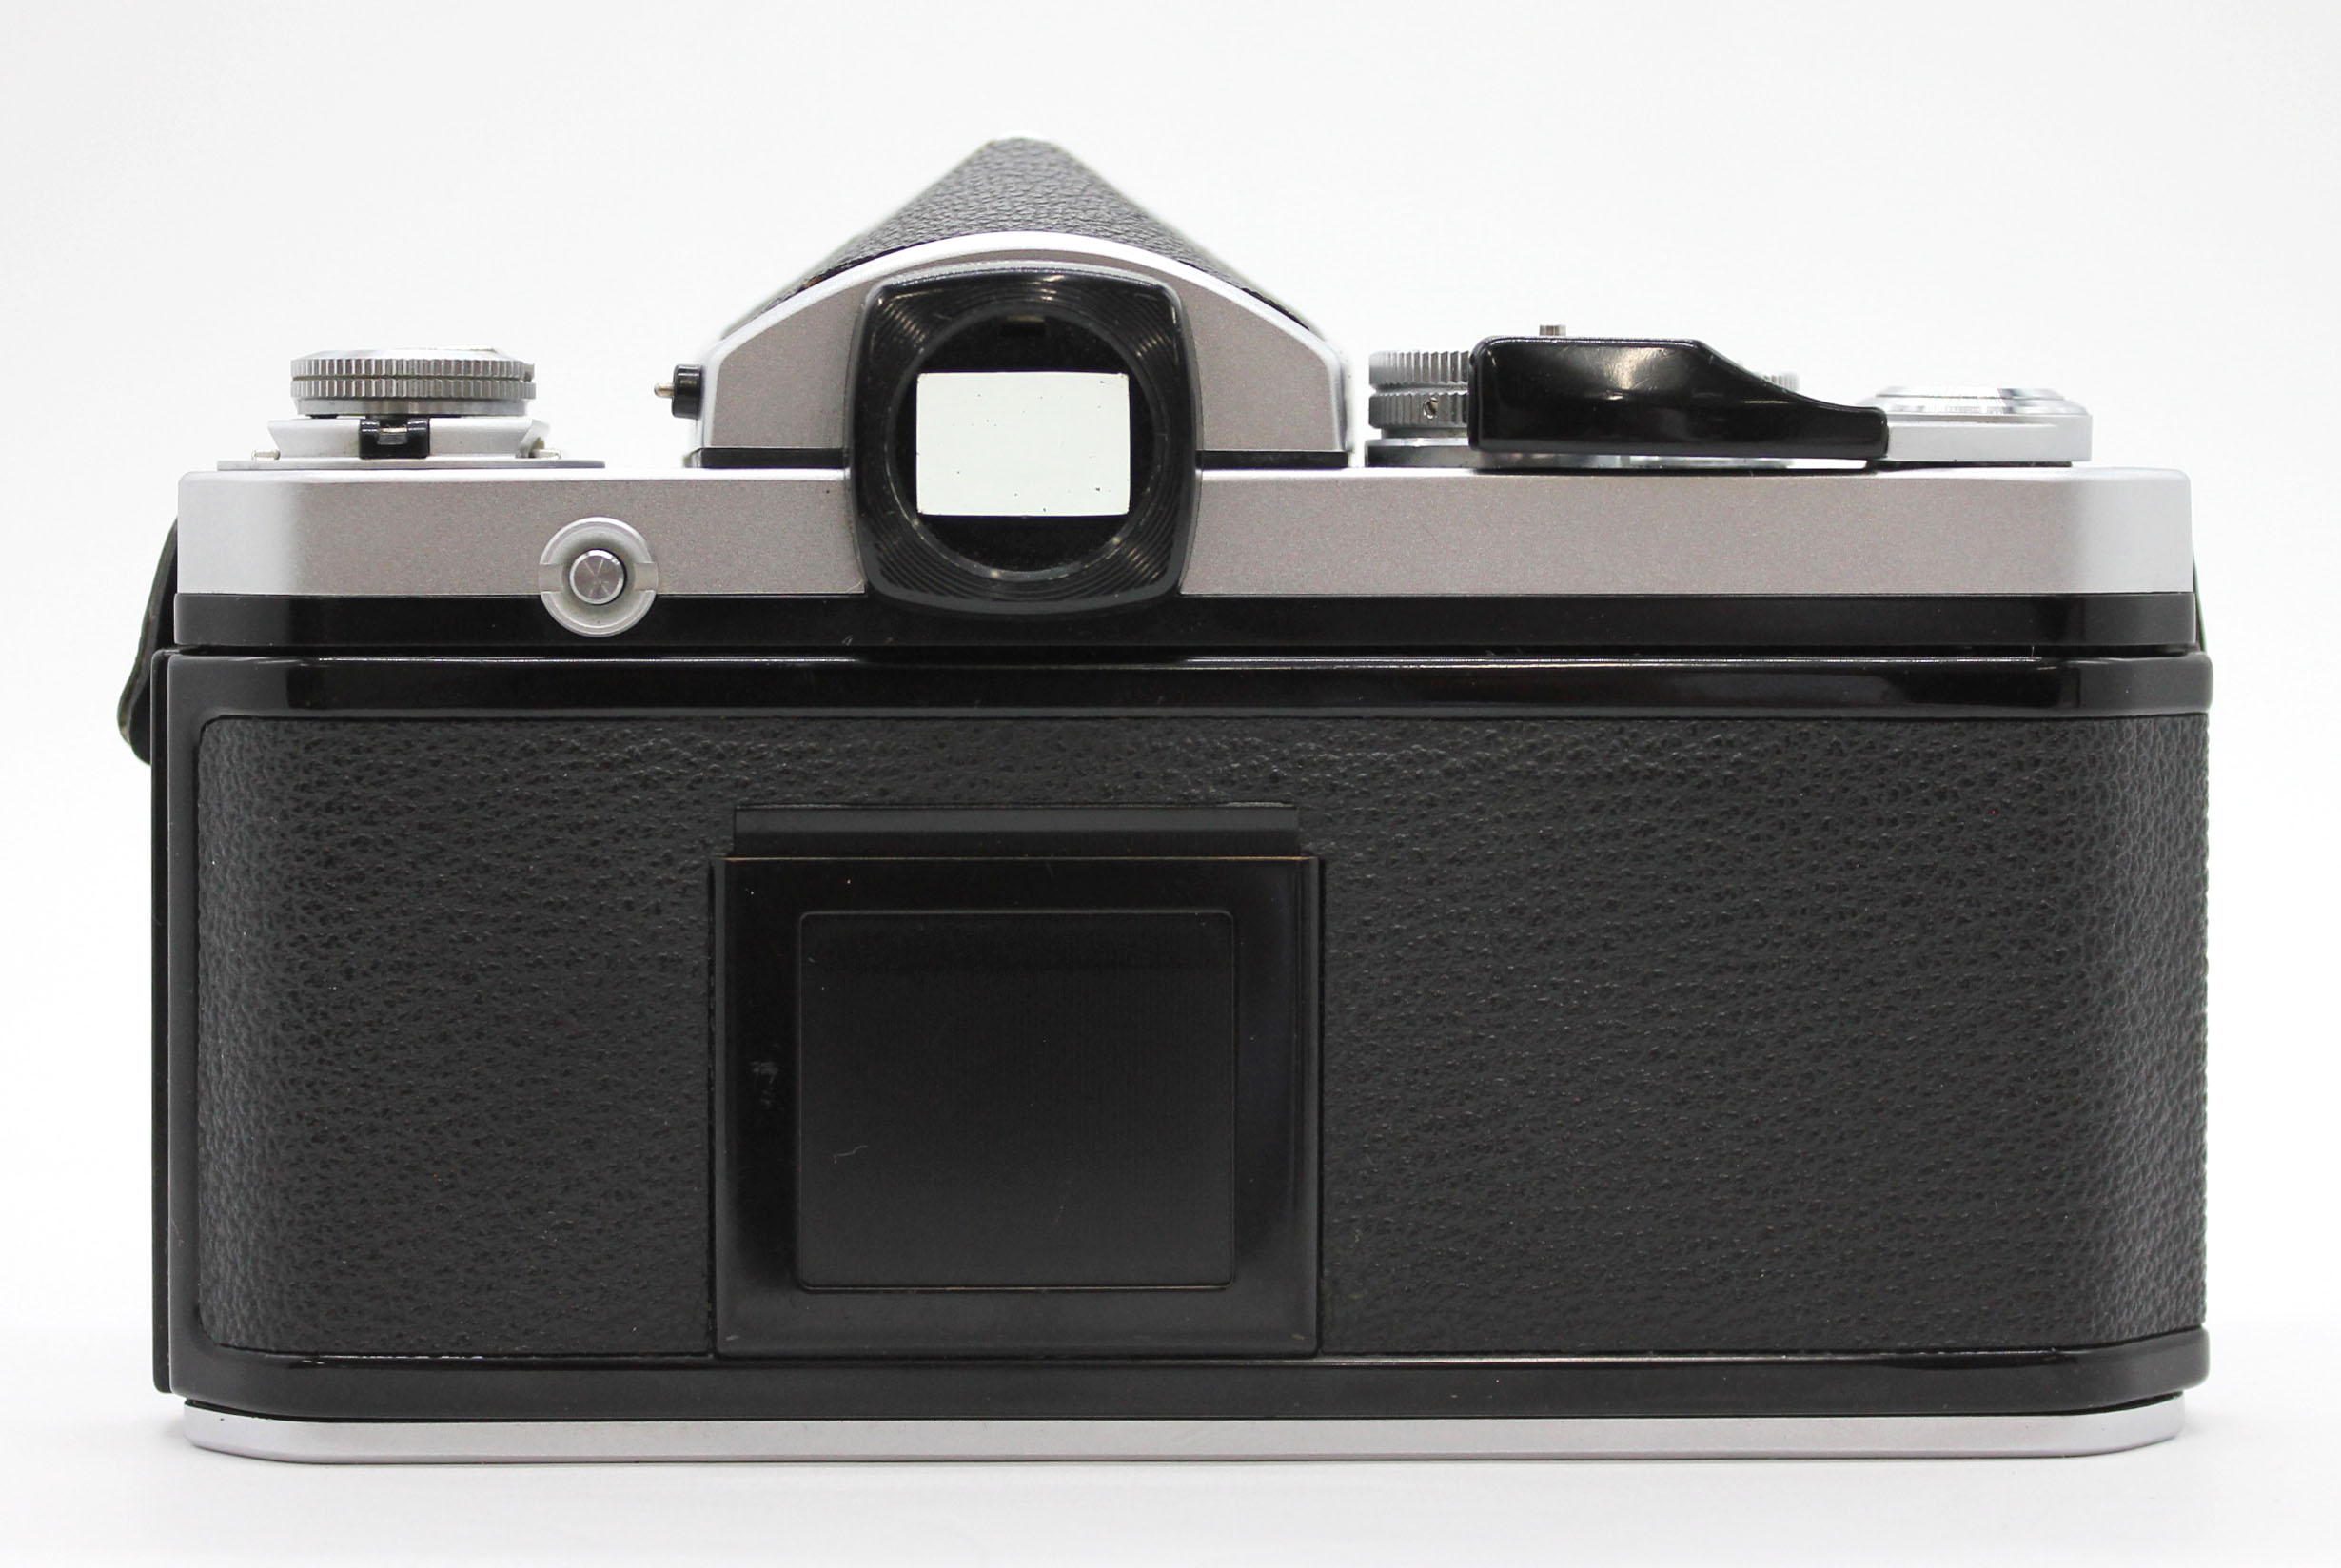  Nikon F2 Eye Level 35mm SLR Film Camera S/N 784* w/ DE-1 View Finder from Japan Photo 6